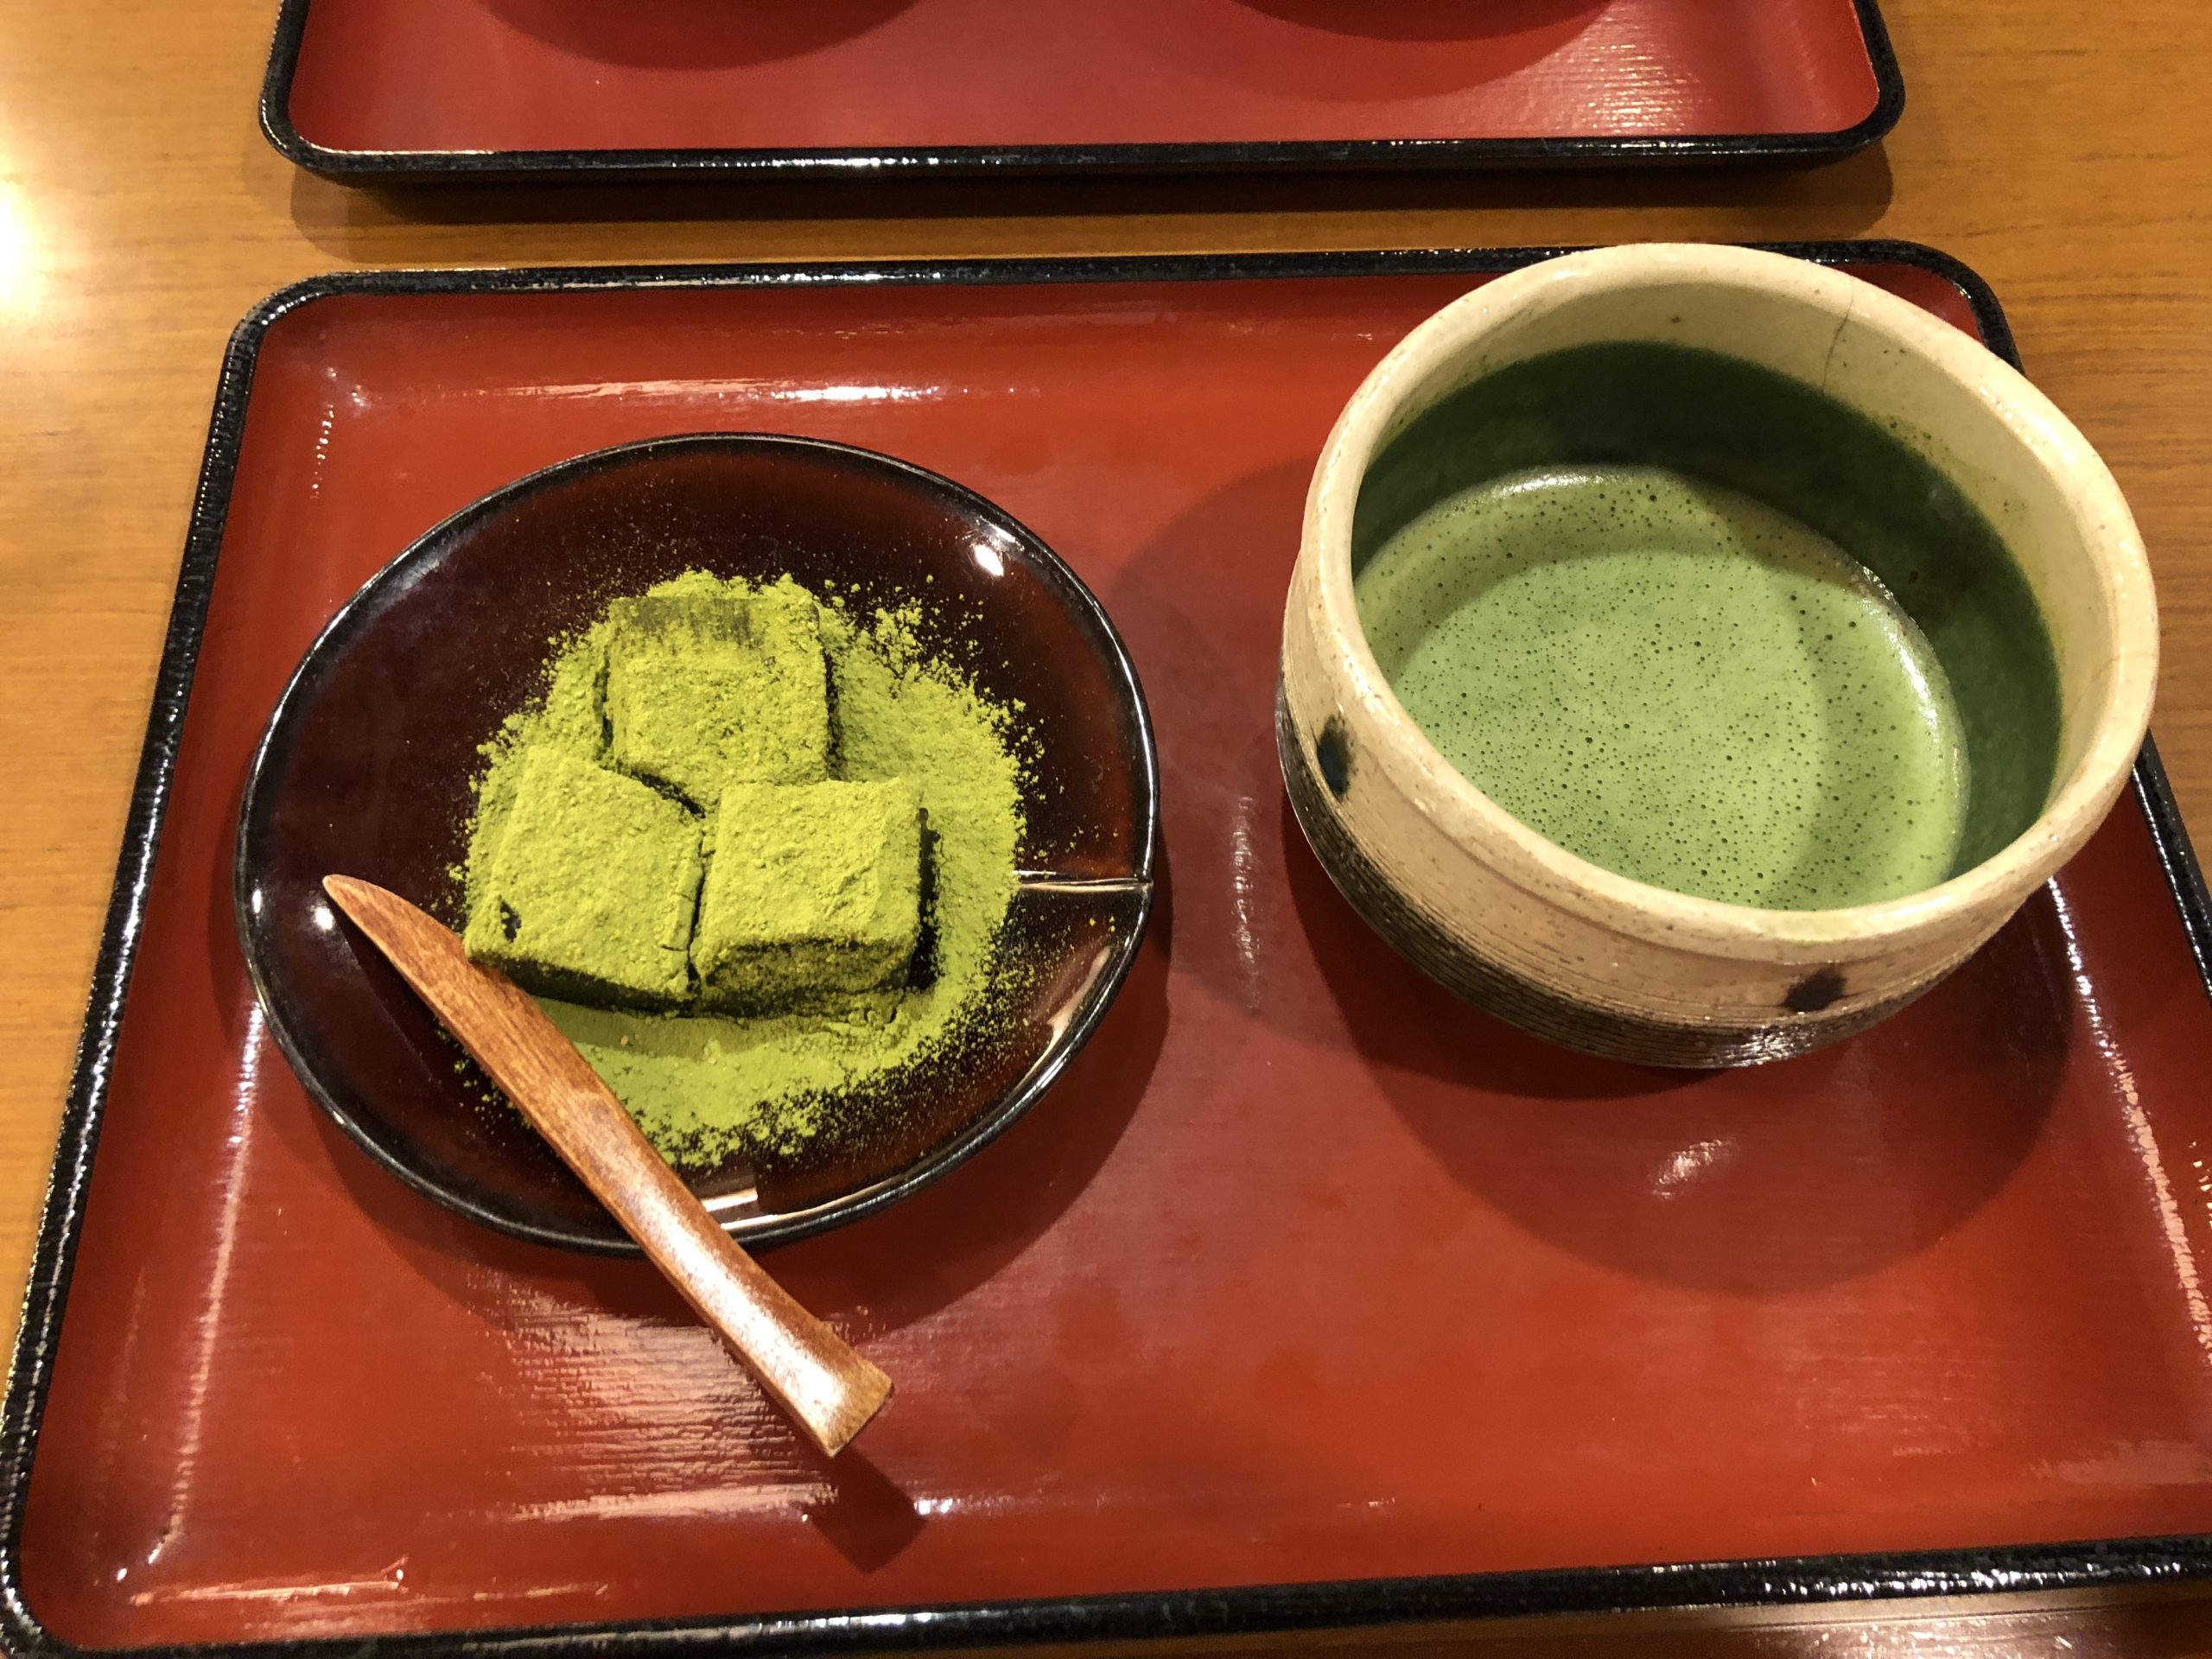 Matcha dessert and tea in Japan